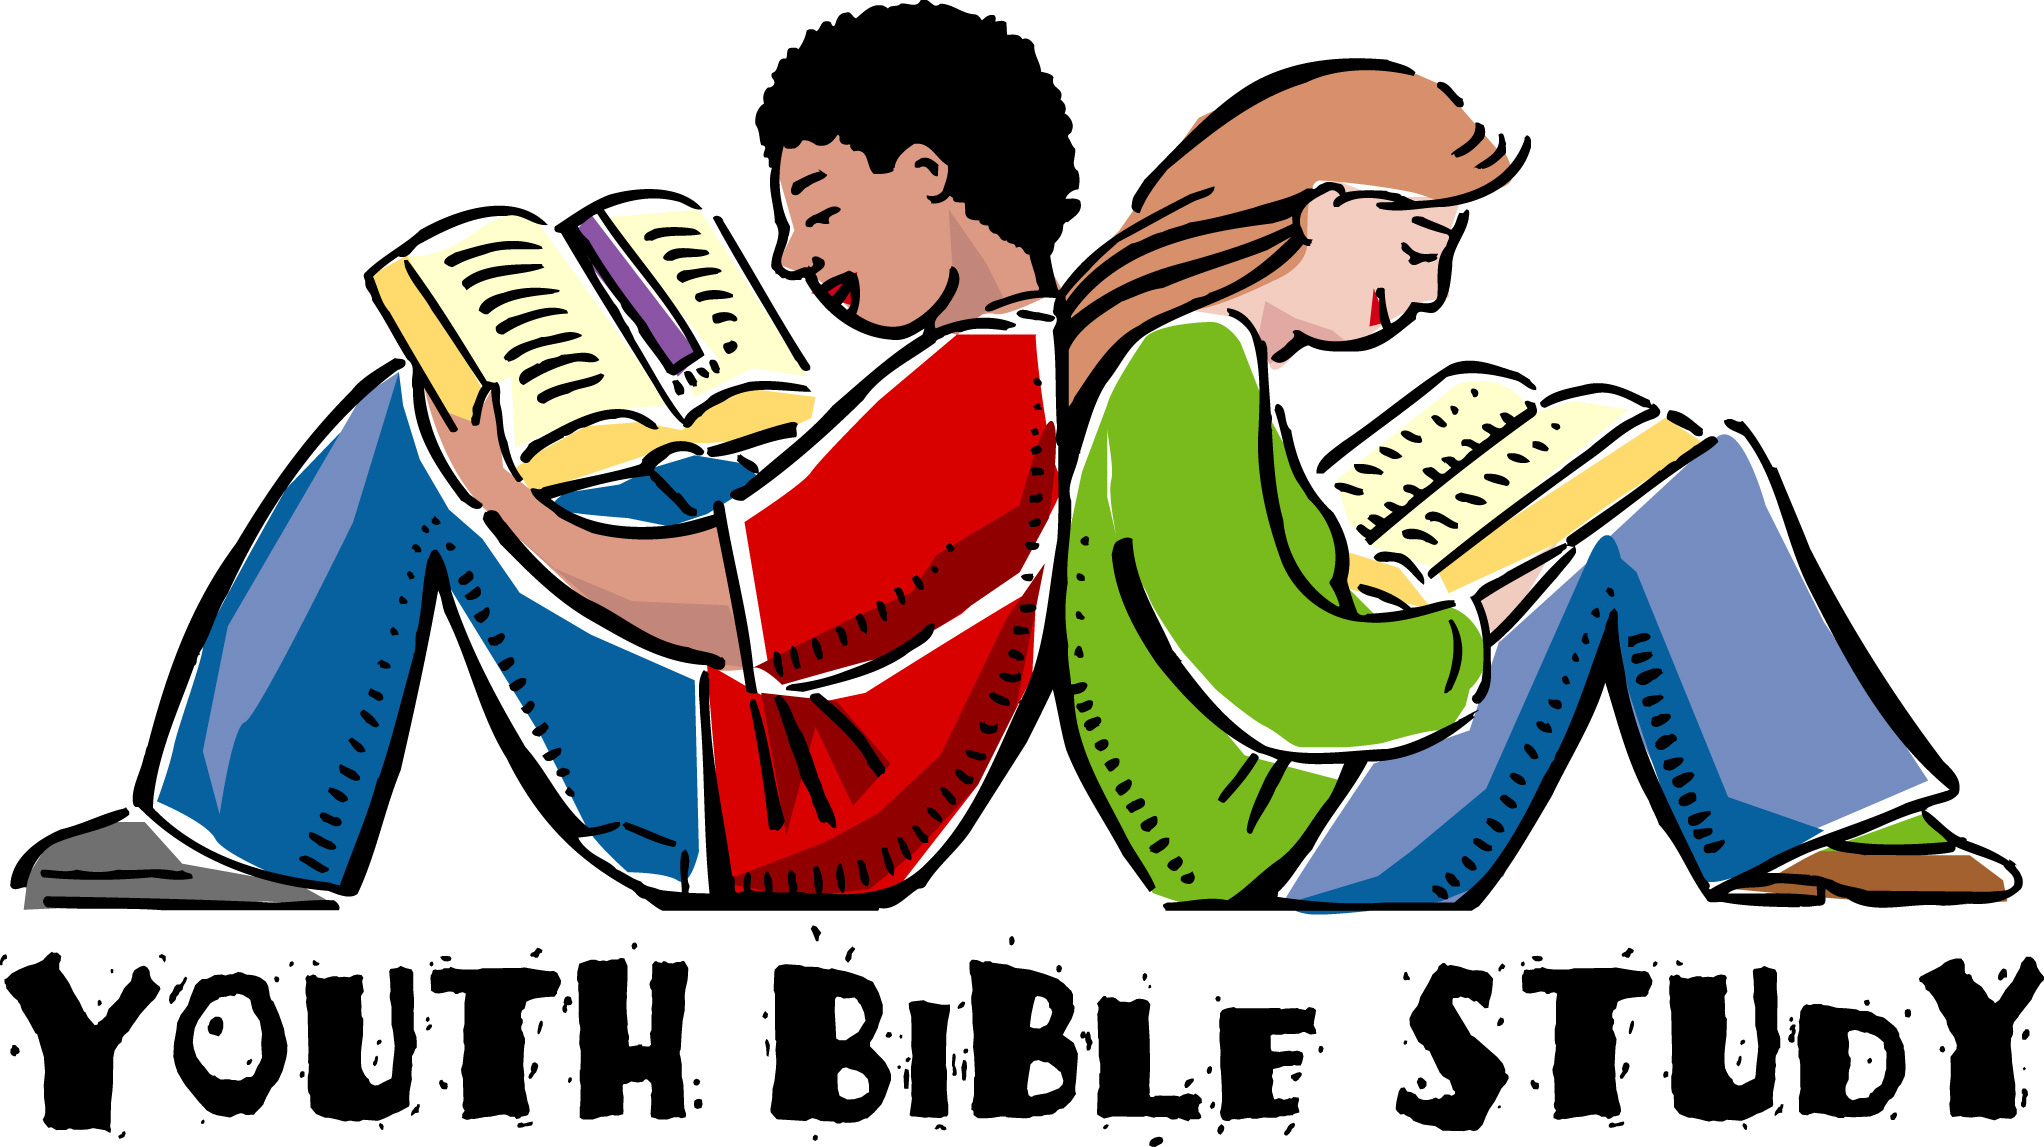 Kids Bible Study Clipart images & pictures - NearPics